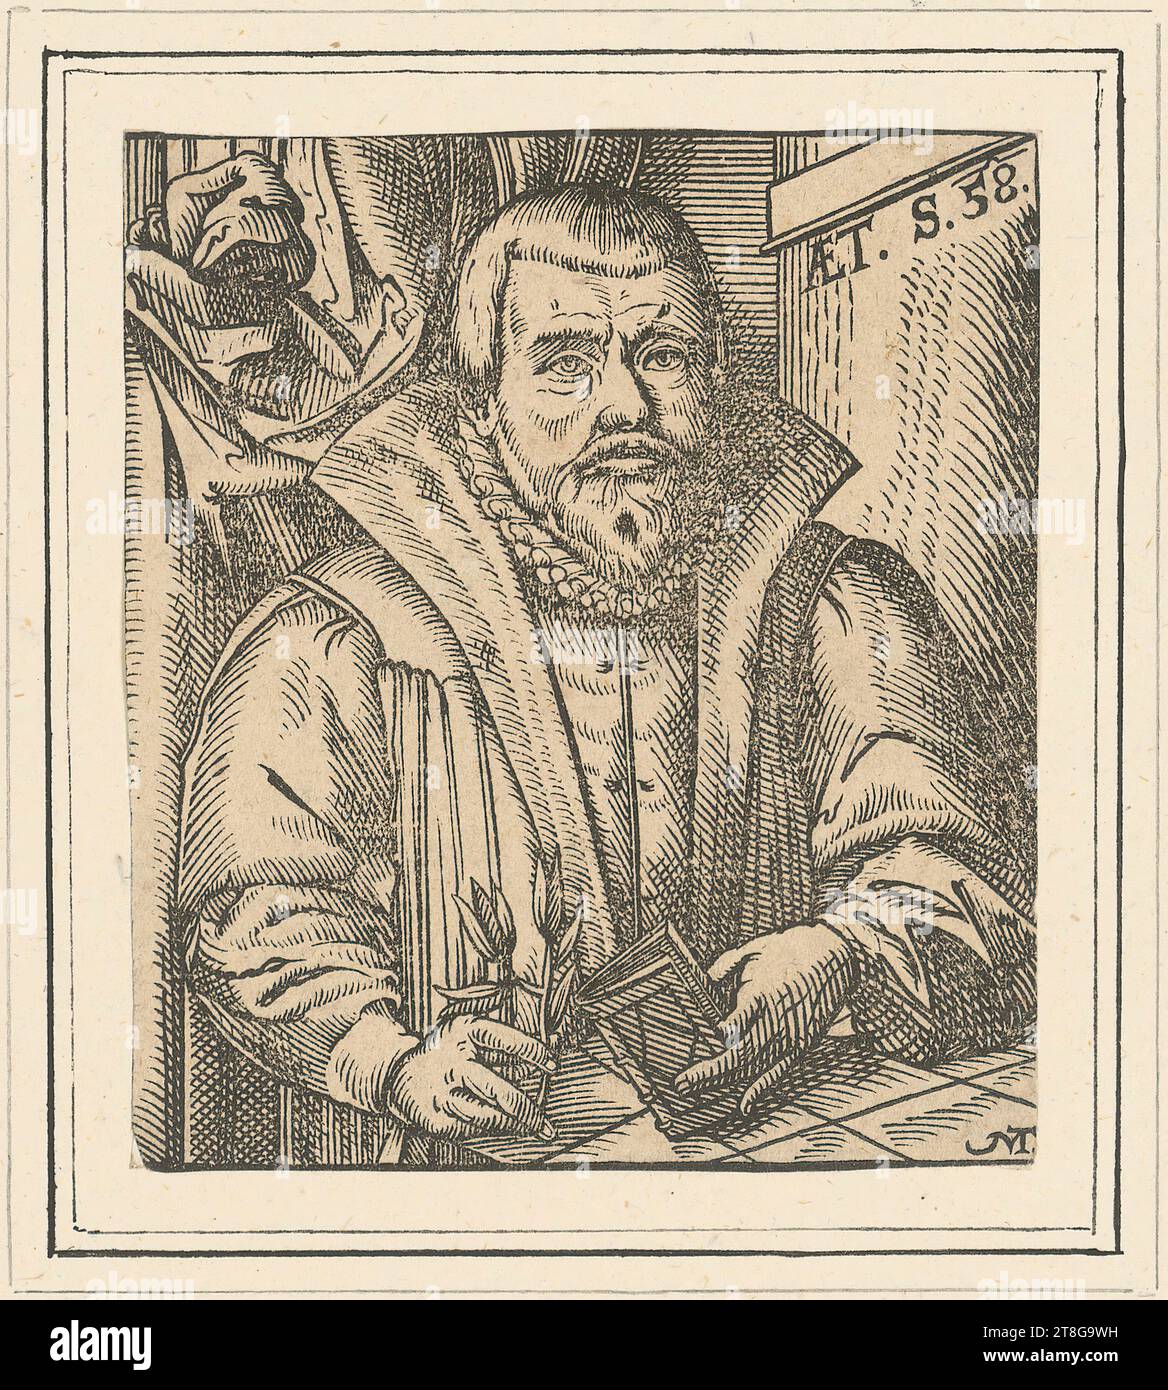 Johann Conrad Klüpfel (1621 mentioned before), engraver Francesco Villamena (1564 - 1624), copy after Blinder Bettler, sheet 4 of the series 'Strassenhändler', Moses Thym (1613, 1617 mentioned around), artist, portrait of Sebastian Artomedes, origin of the print medium: 1602 - 1614, woodcut on vergé paper, sheet size: 9.1 x 8.0 cm, upper right inscribed 'ÆT. S. 58.' and monogrammed lower right 'MT. ligatured Stock Photo